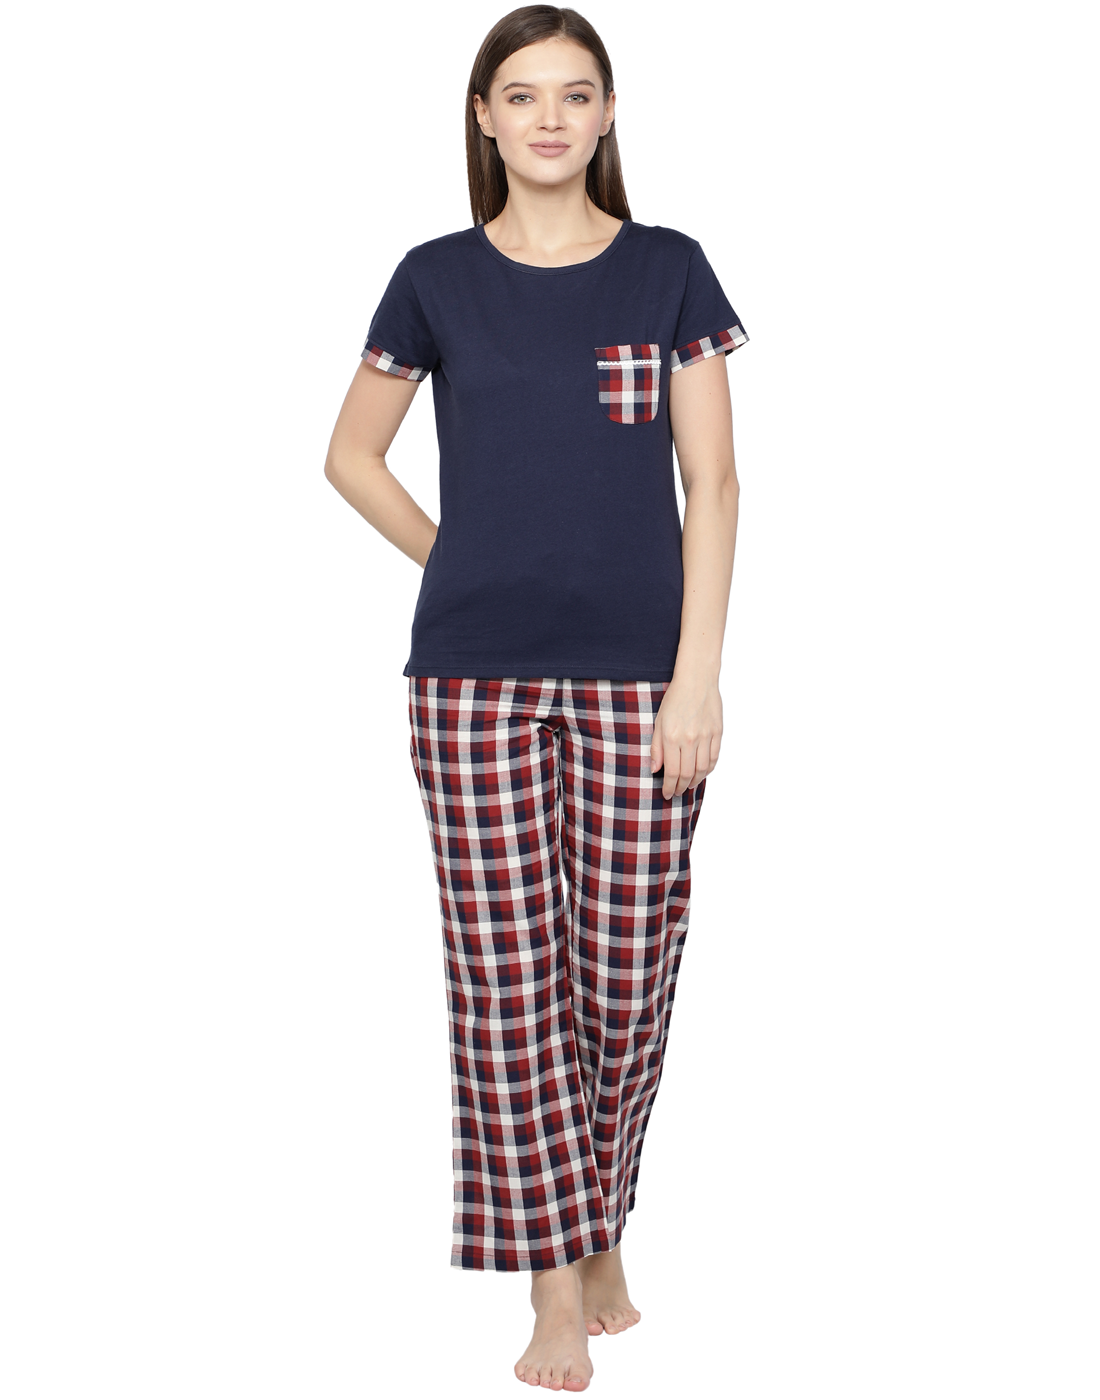 Pyjama Set for Women-Nautical Checked